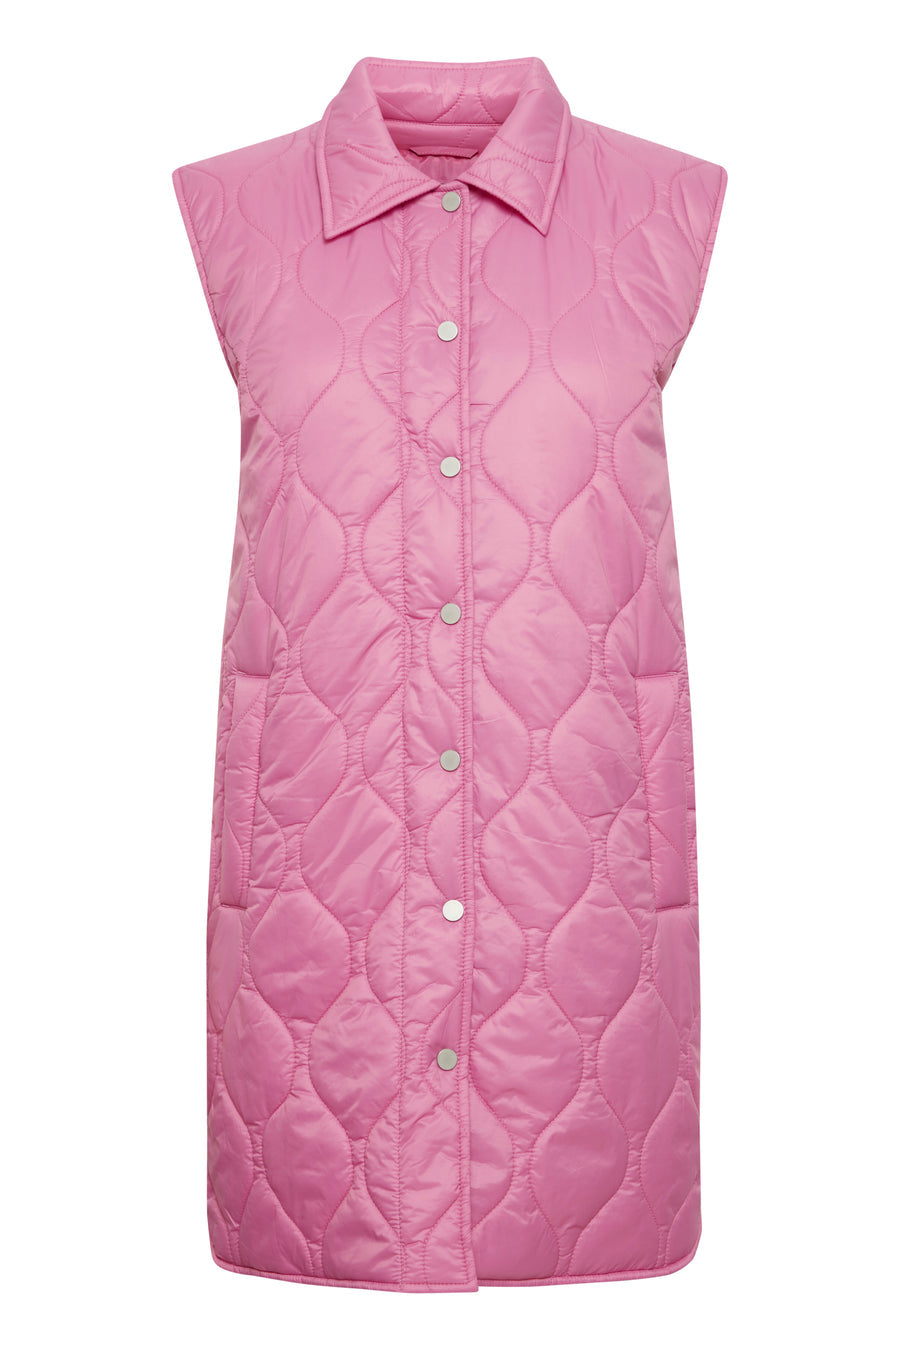 B young Super Pink Waistcoat 20814228